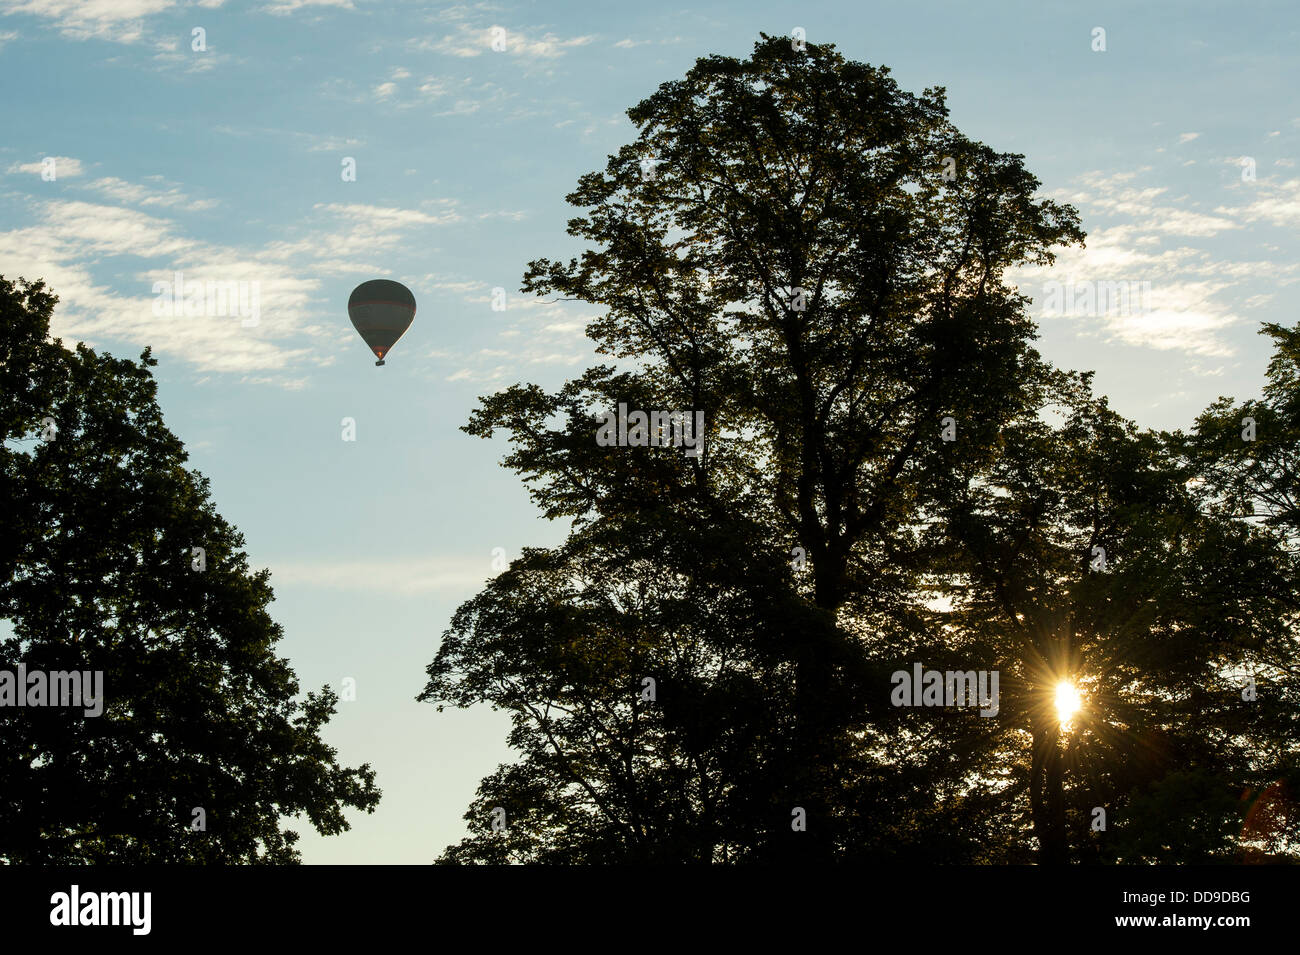 Hot Air Balloon silhouette à travers les arbres dans le soleil matinal. Stratford Upon Avon, Angleterre Banque D'Images